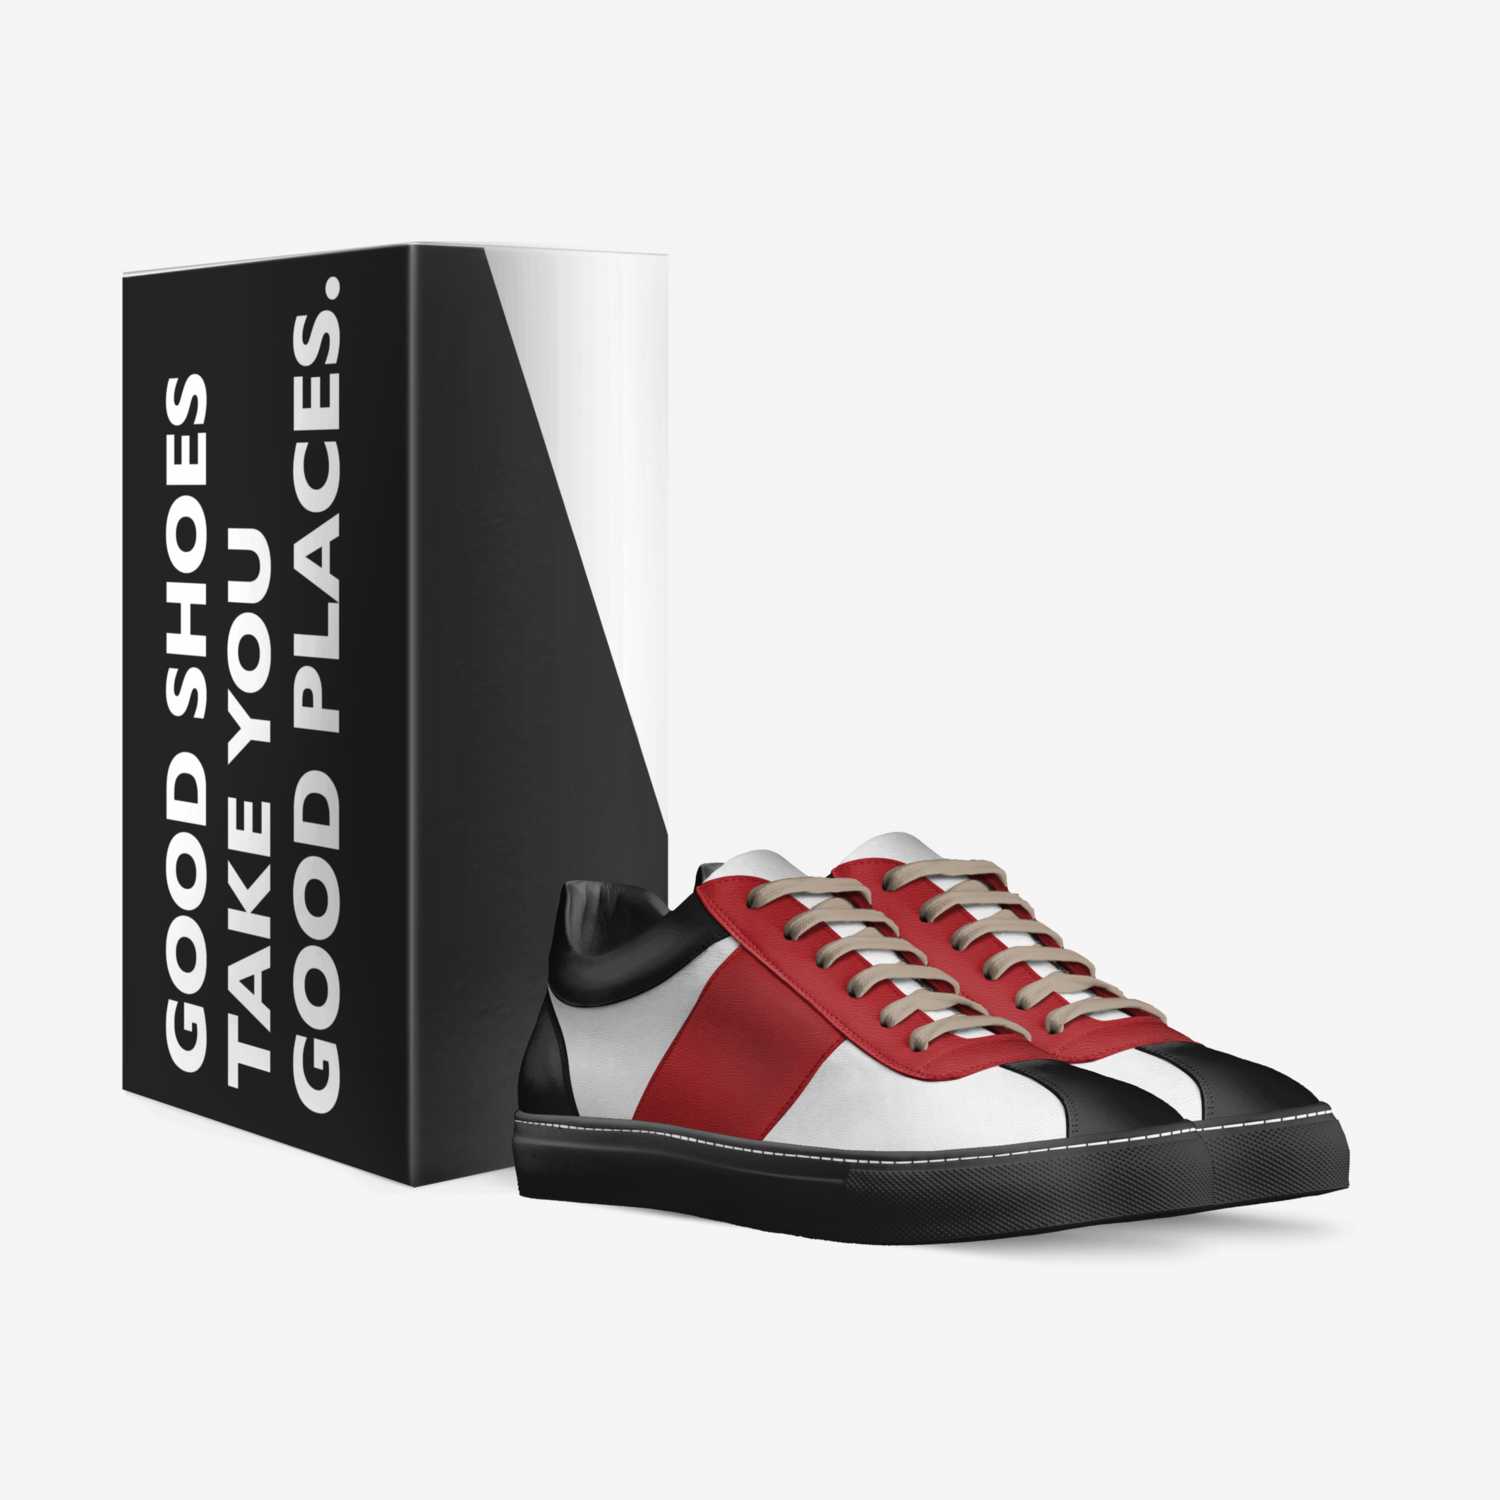 GeorgIsaacs custom made in Italy shoes by Gregir | Box view